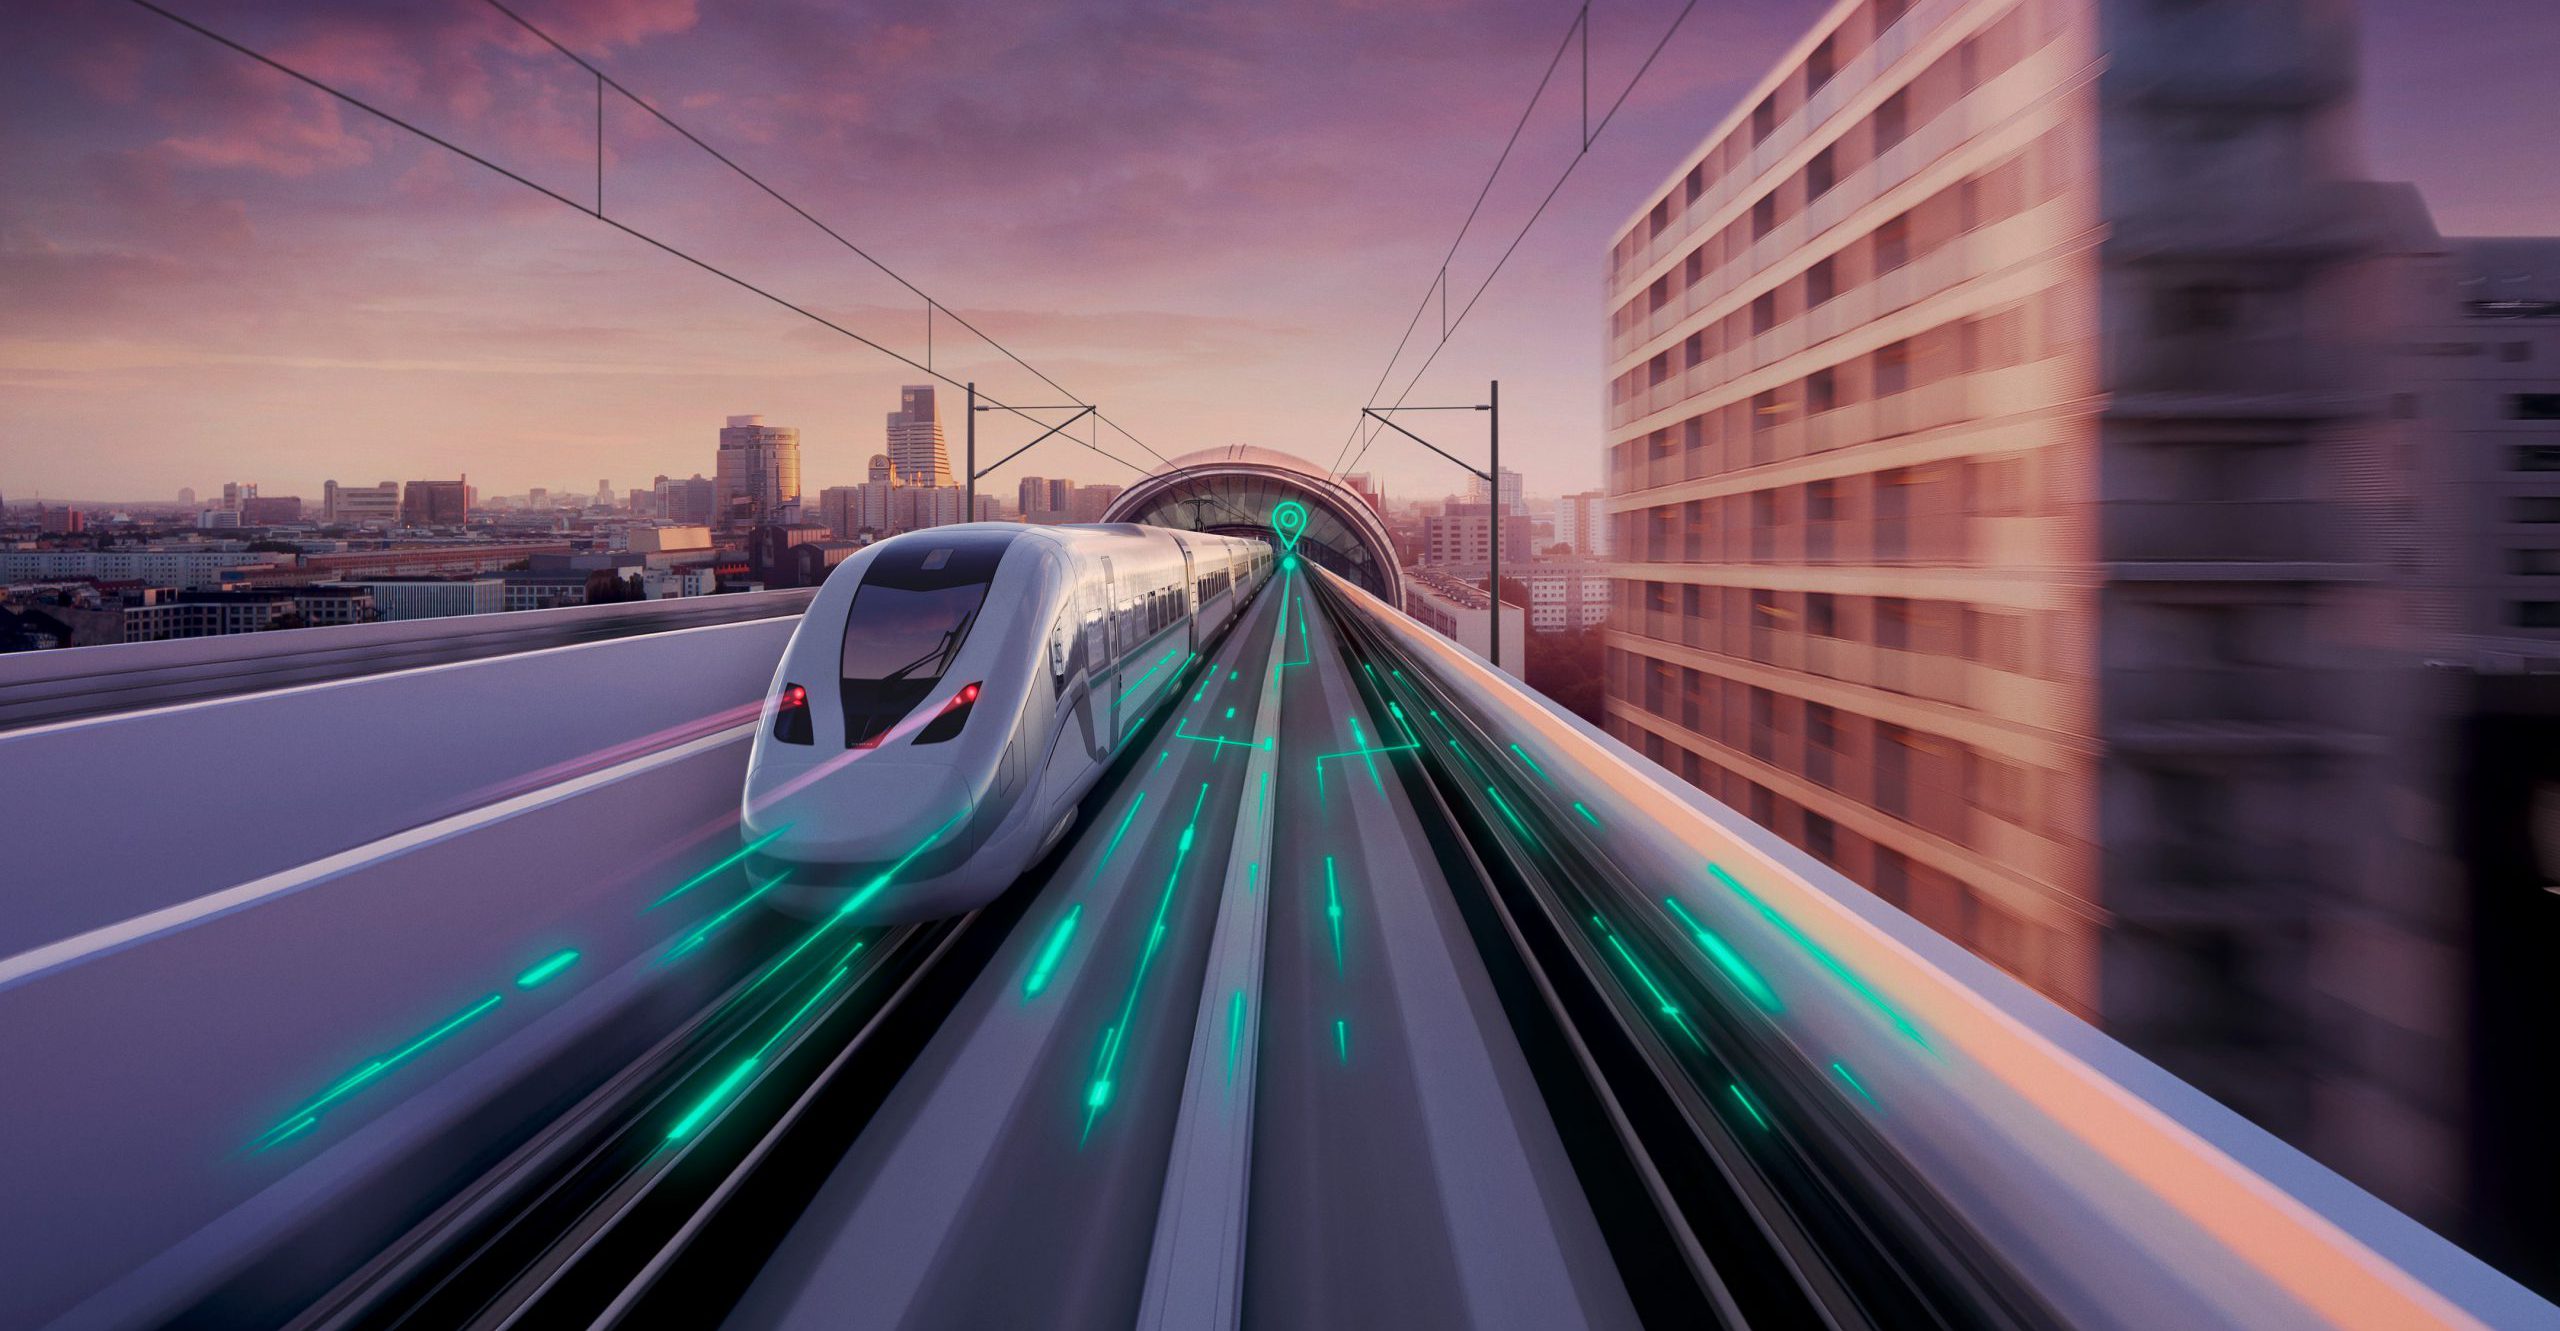 Railway driving toward a sustainable future